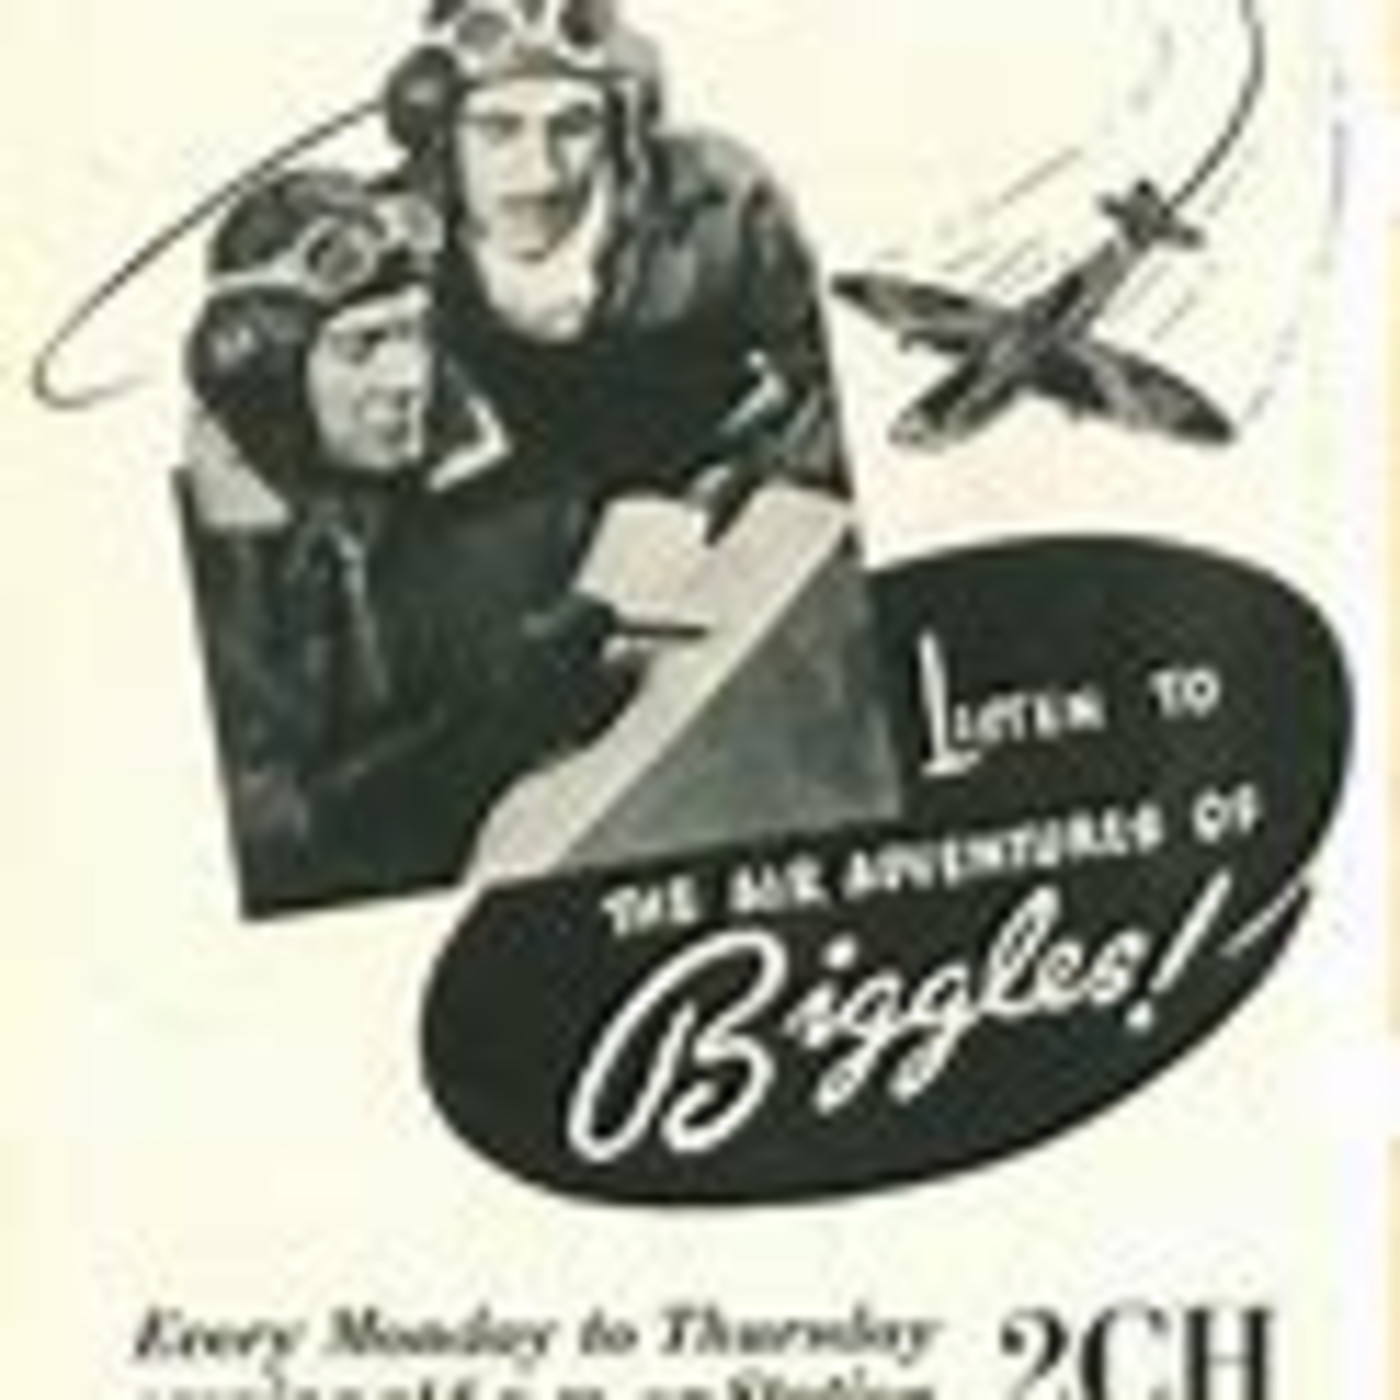 Air Adventures of Biggles xx-xx-xx International Brigade (22)